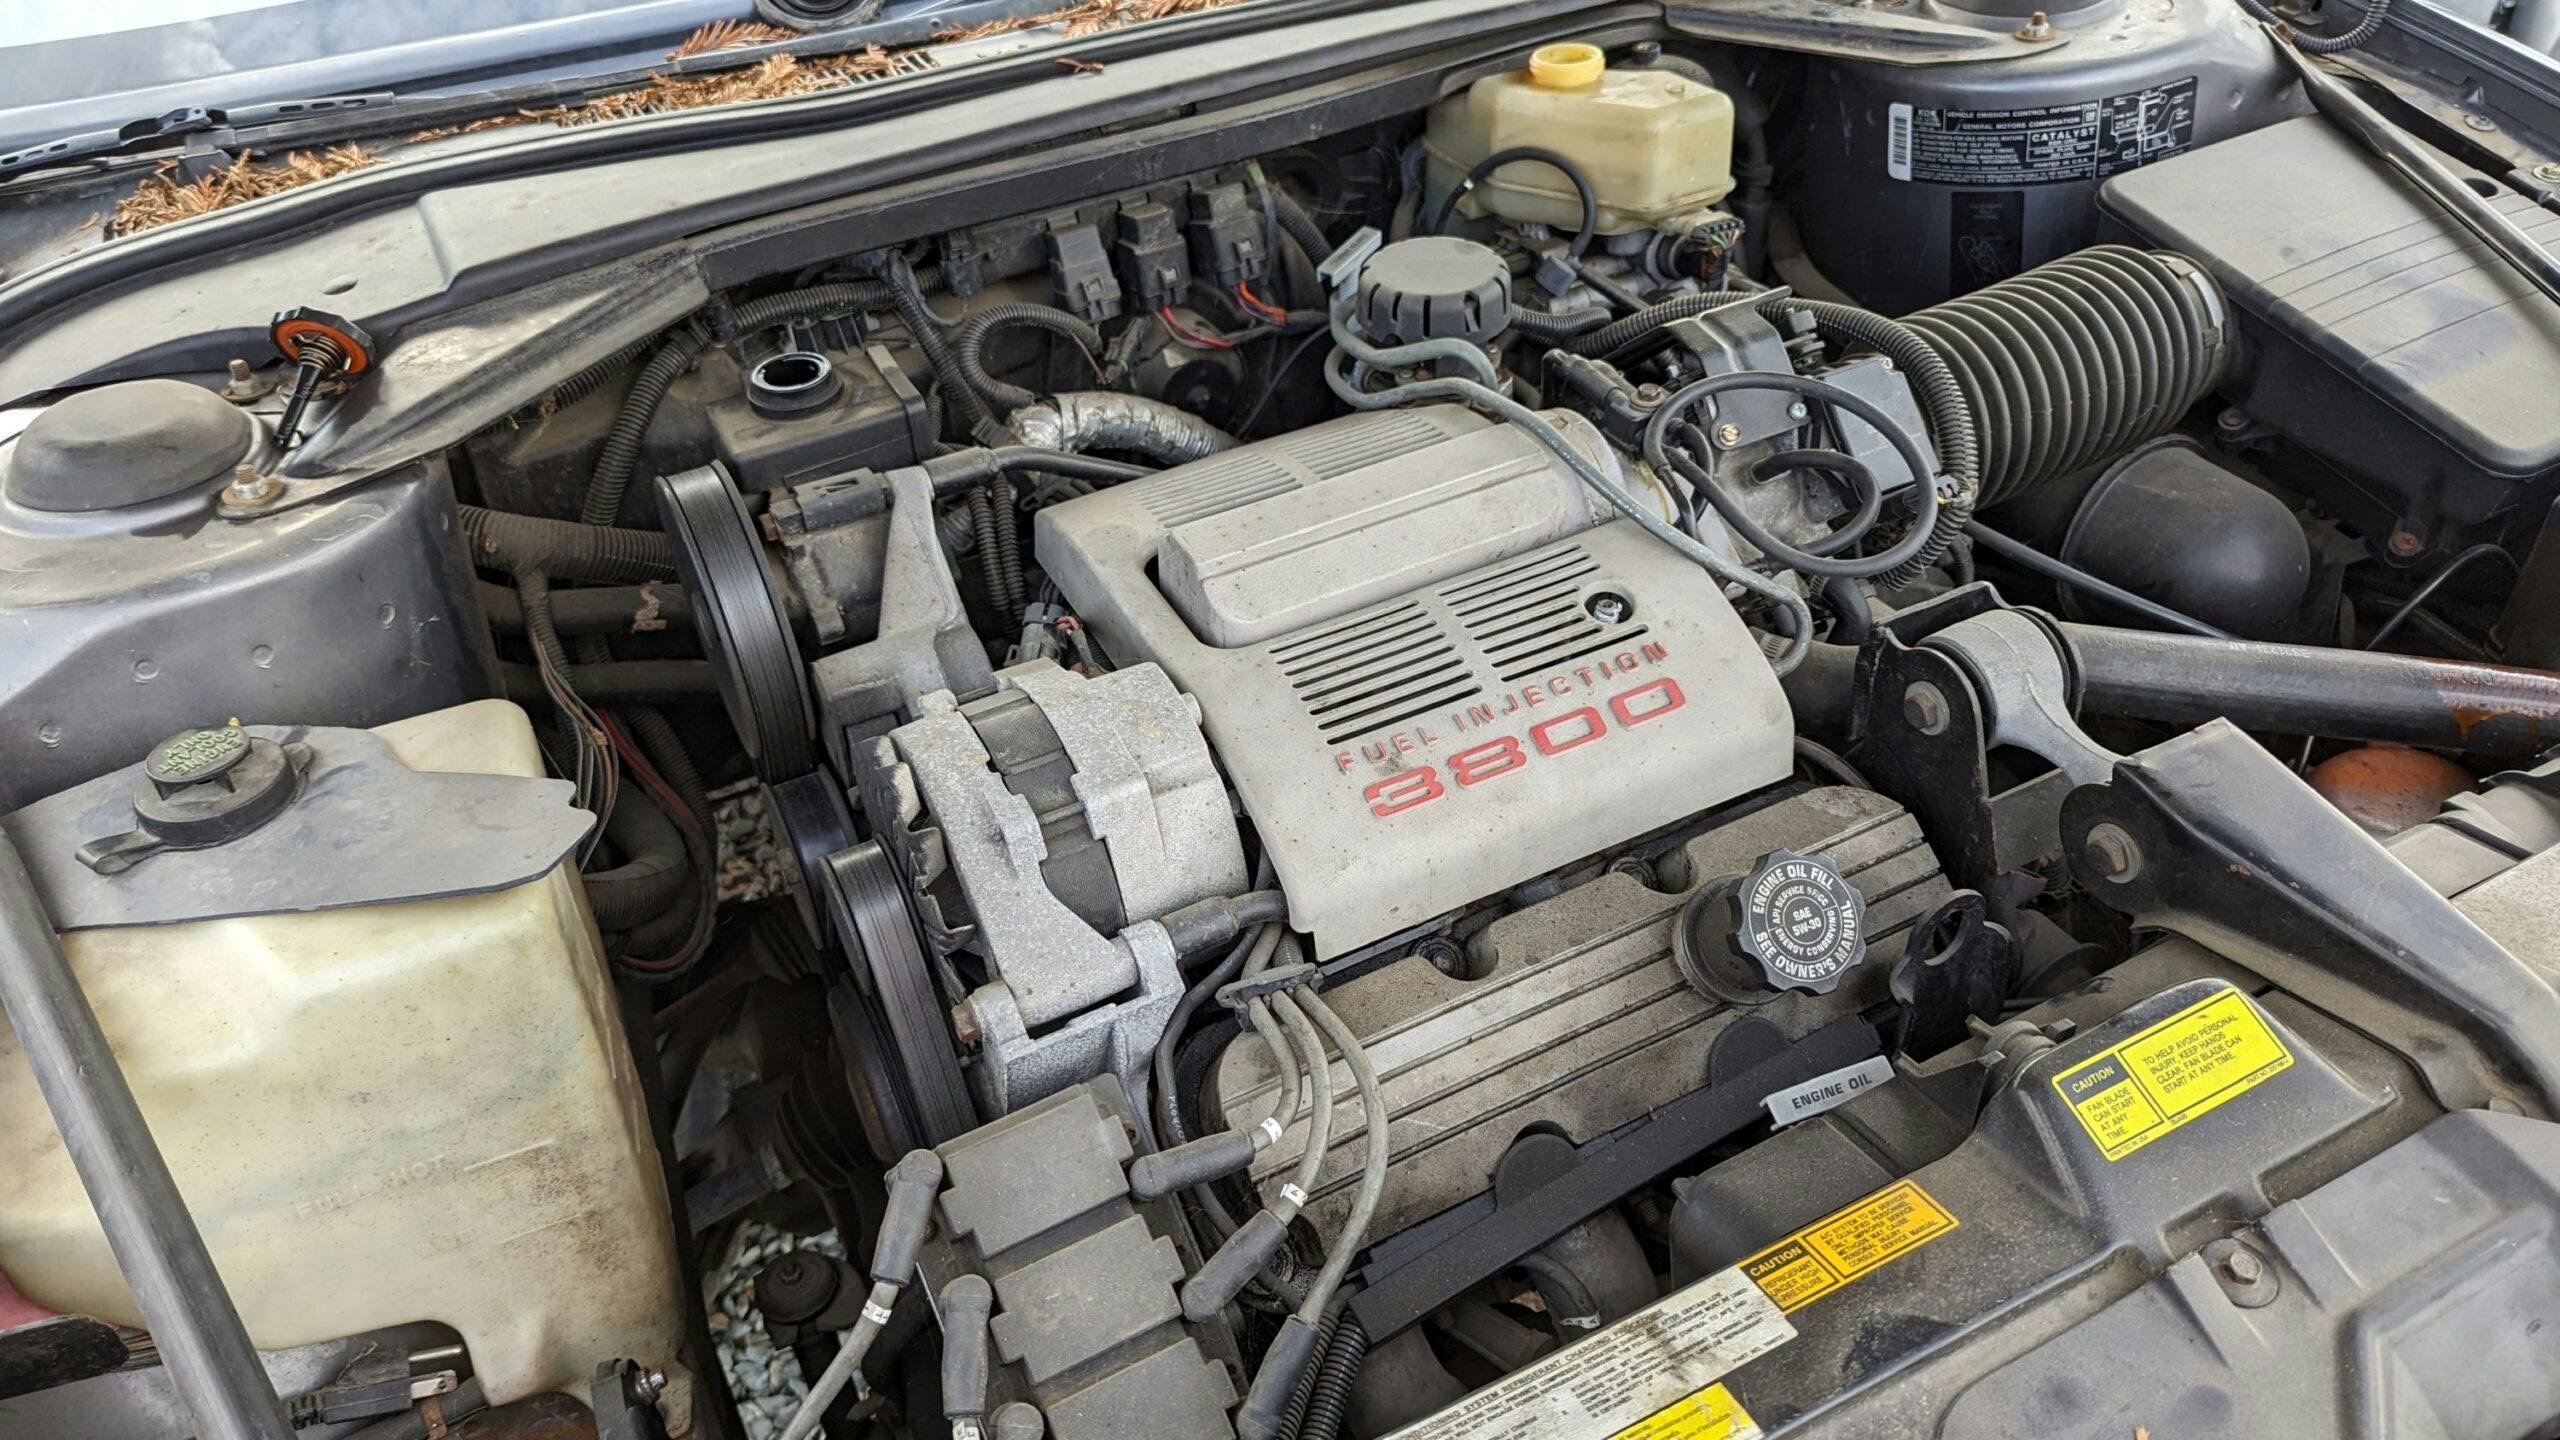 1989 Buick Reatta engine